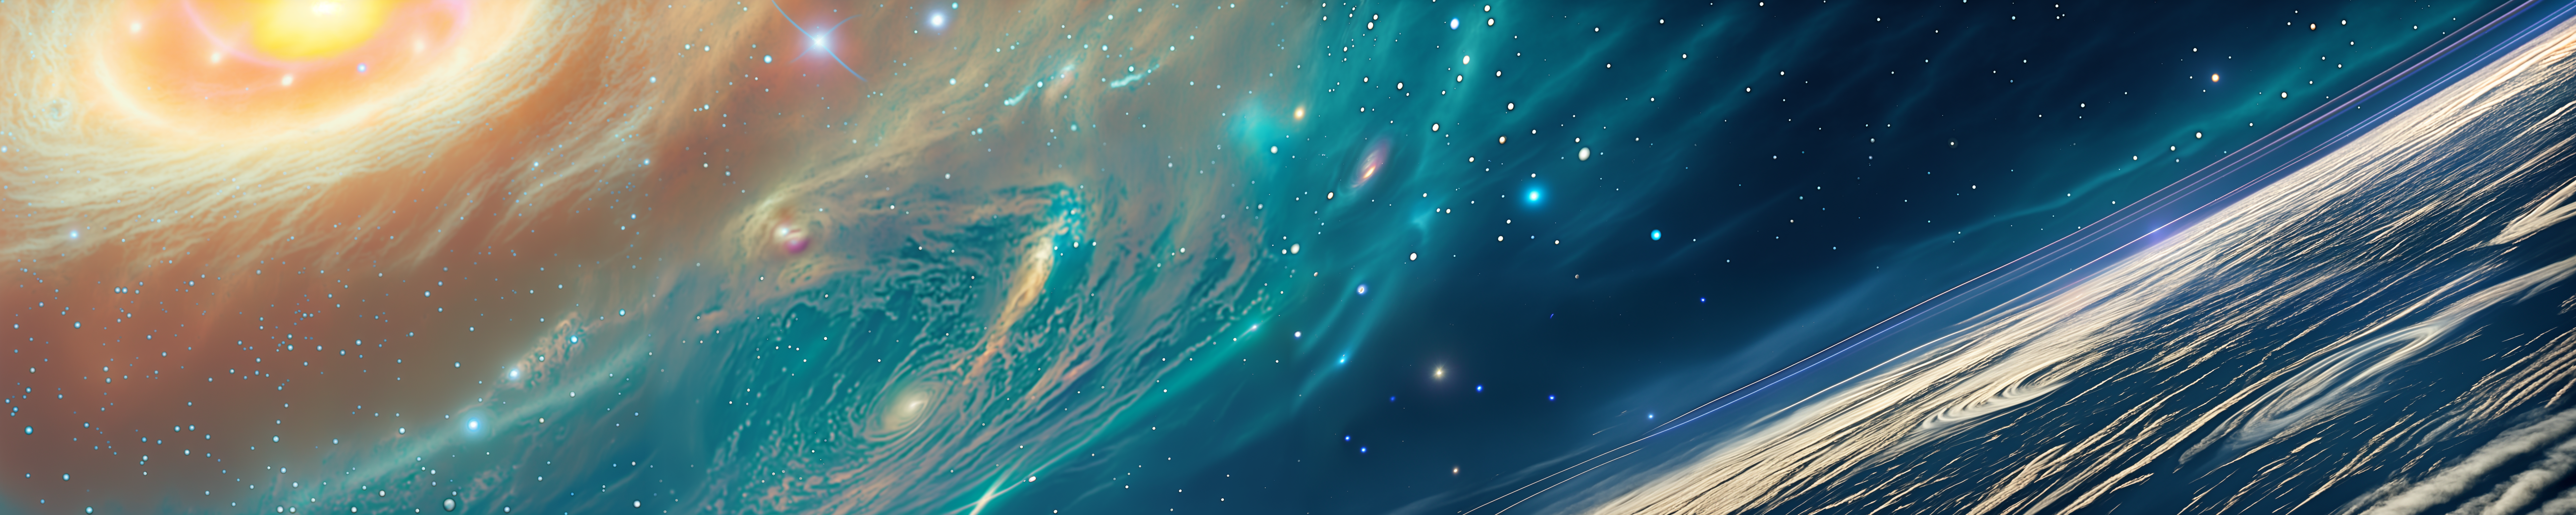 General 7680x1536 AI art space nebula stars simple background wide screen ultrawide